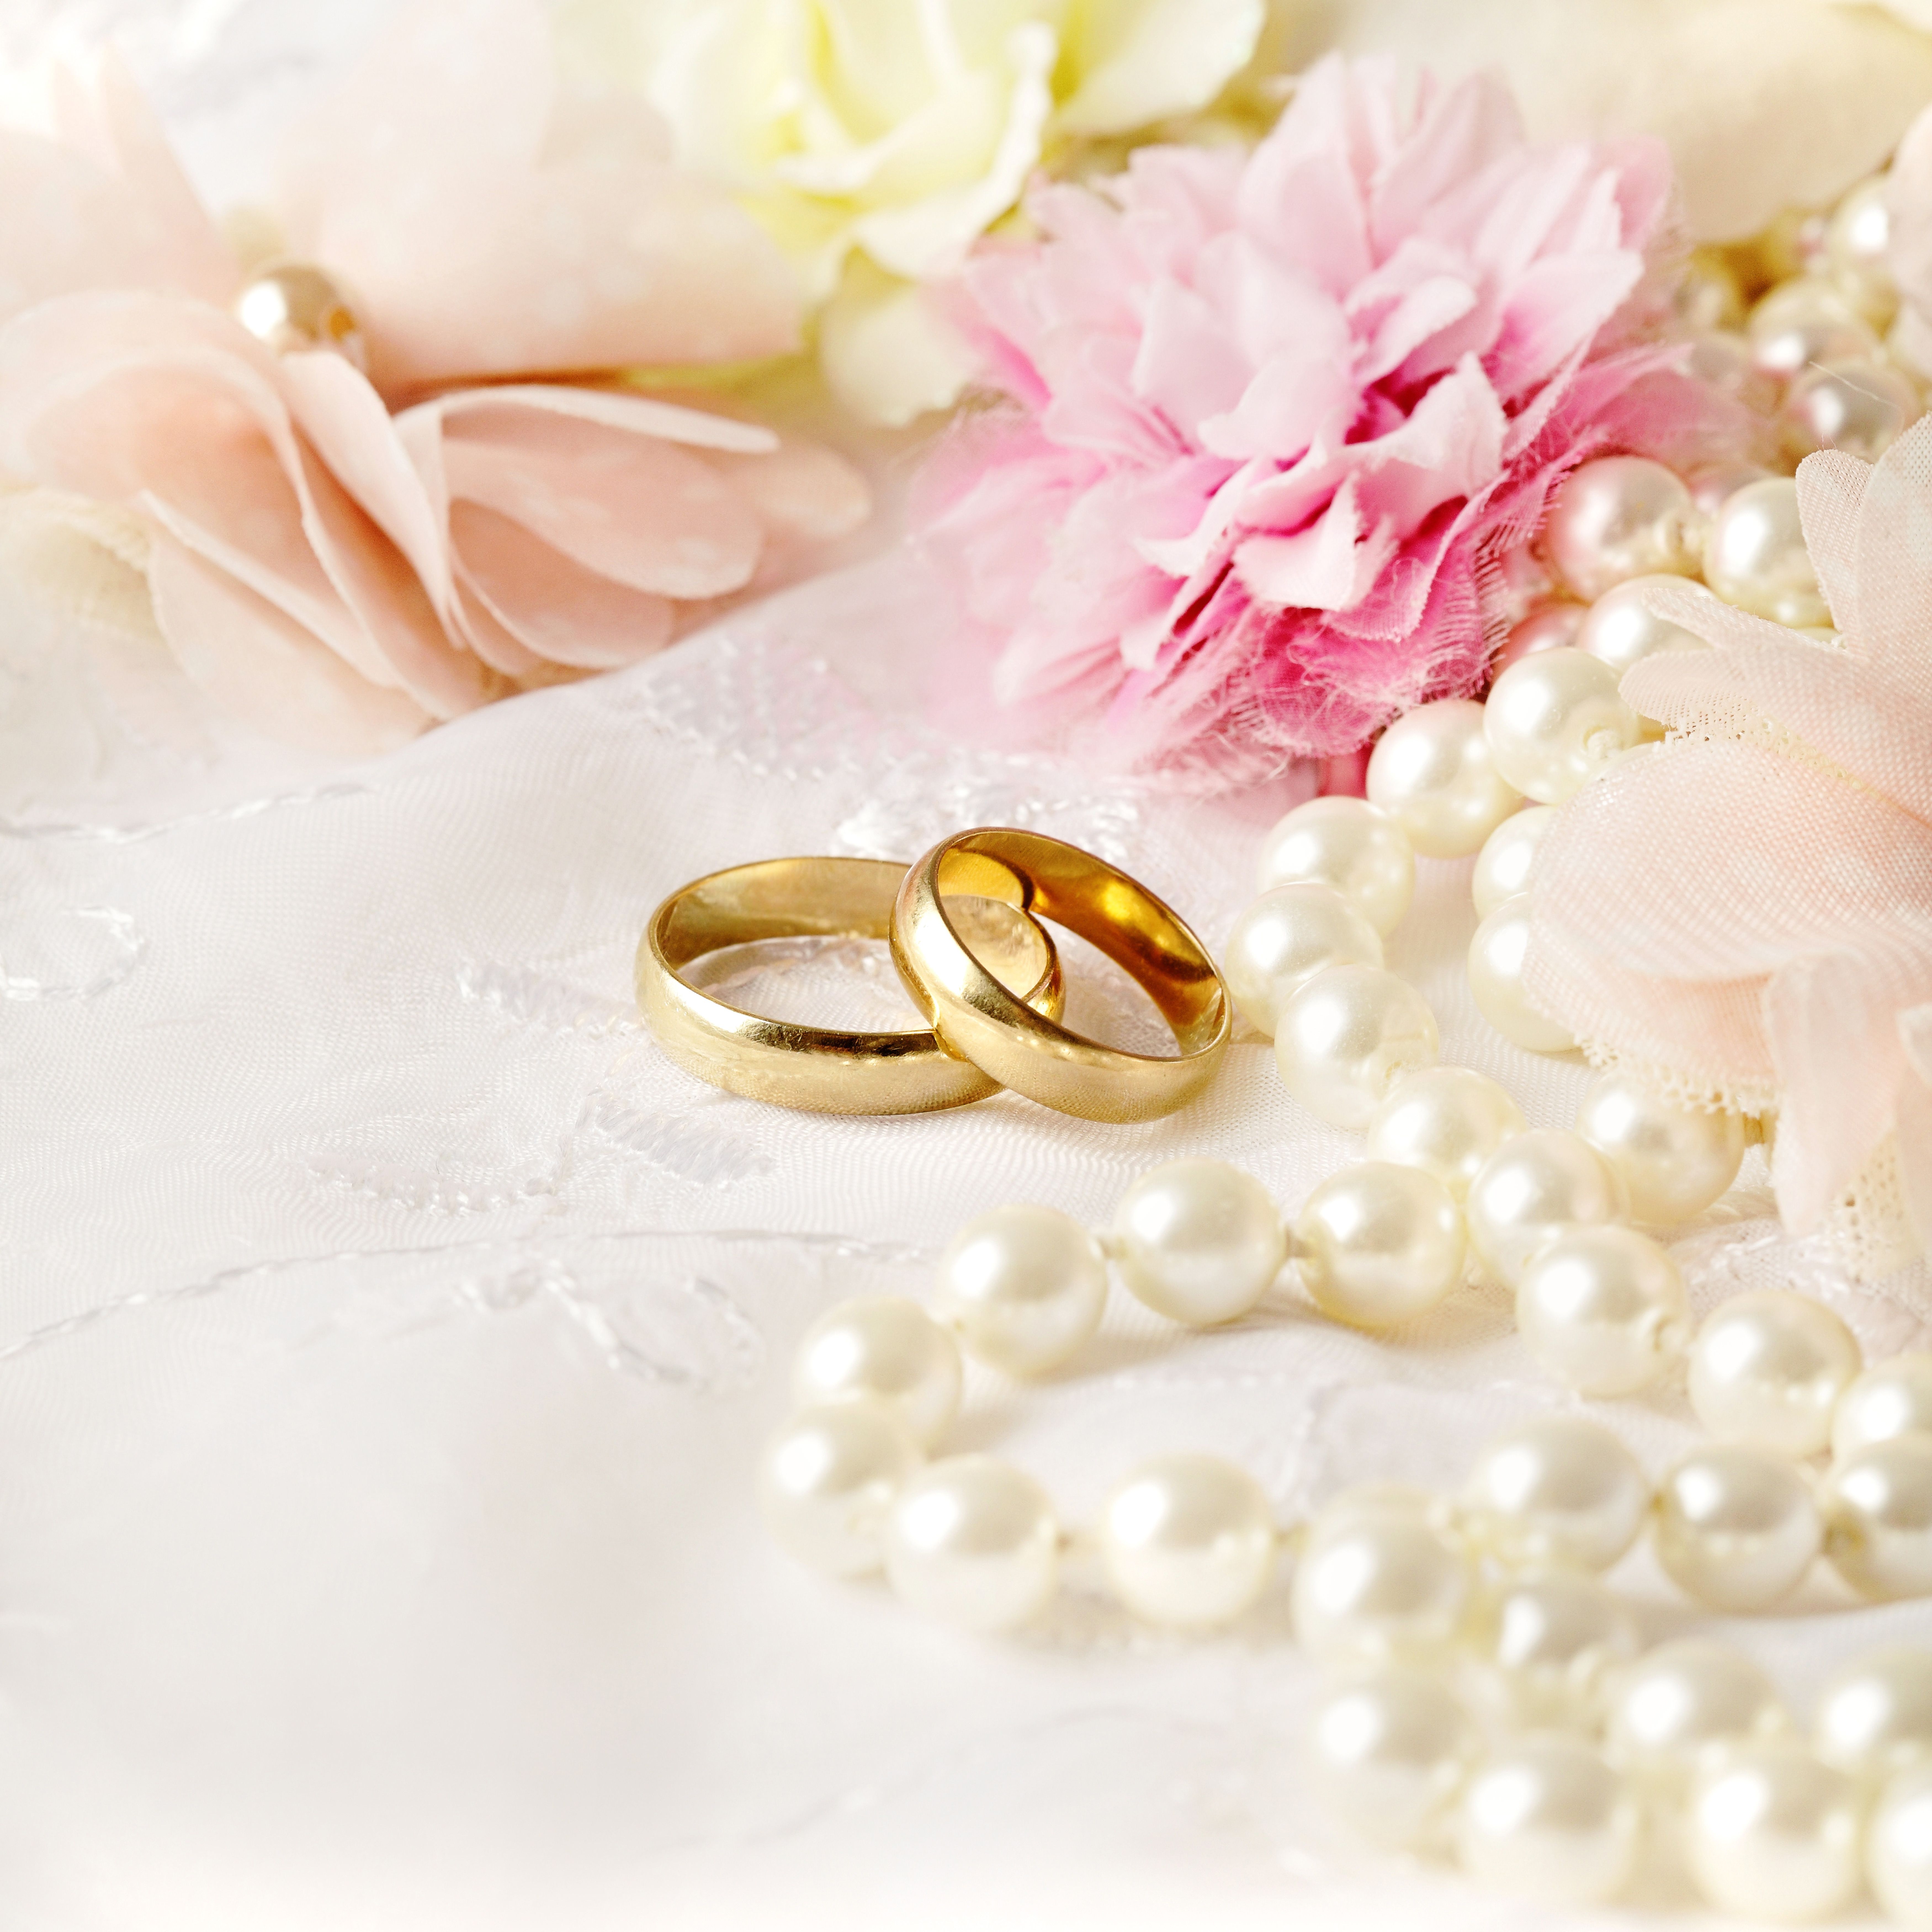 hochzeit壁紙,結婚式用品,ピンク,結婚指輪,ボディジュエリー,リング